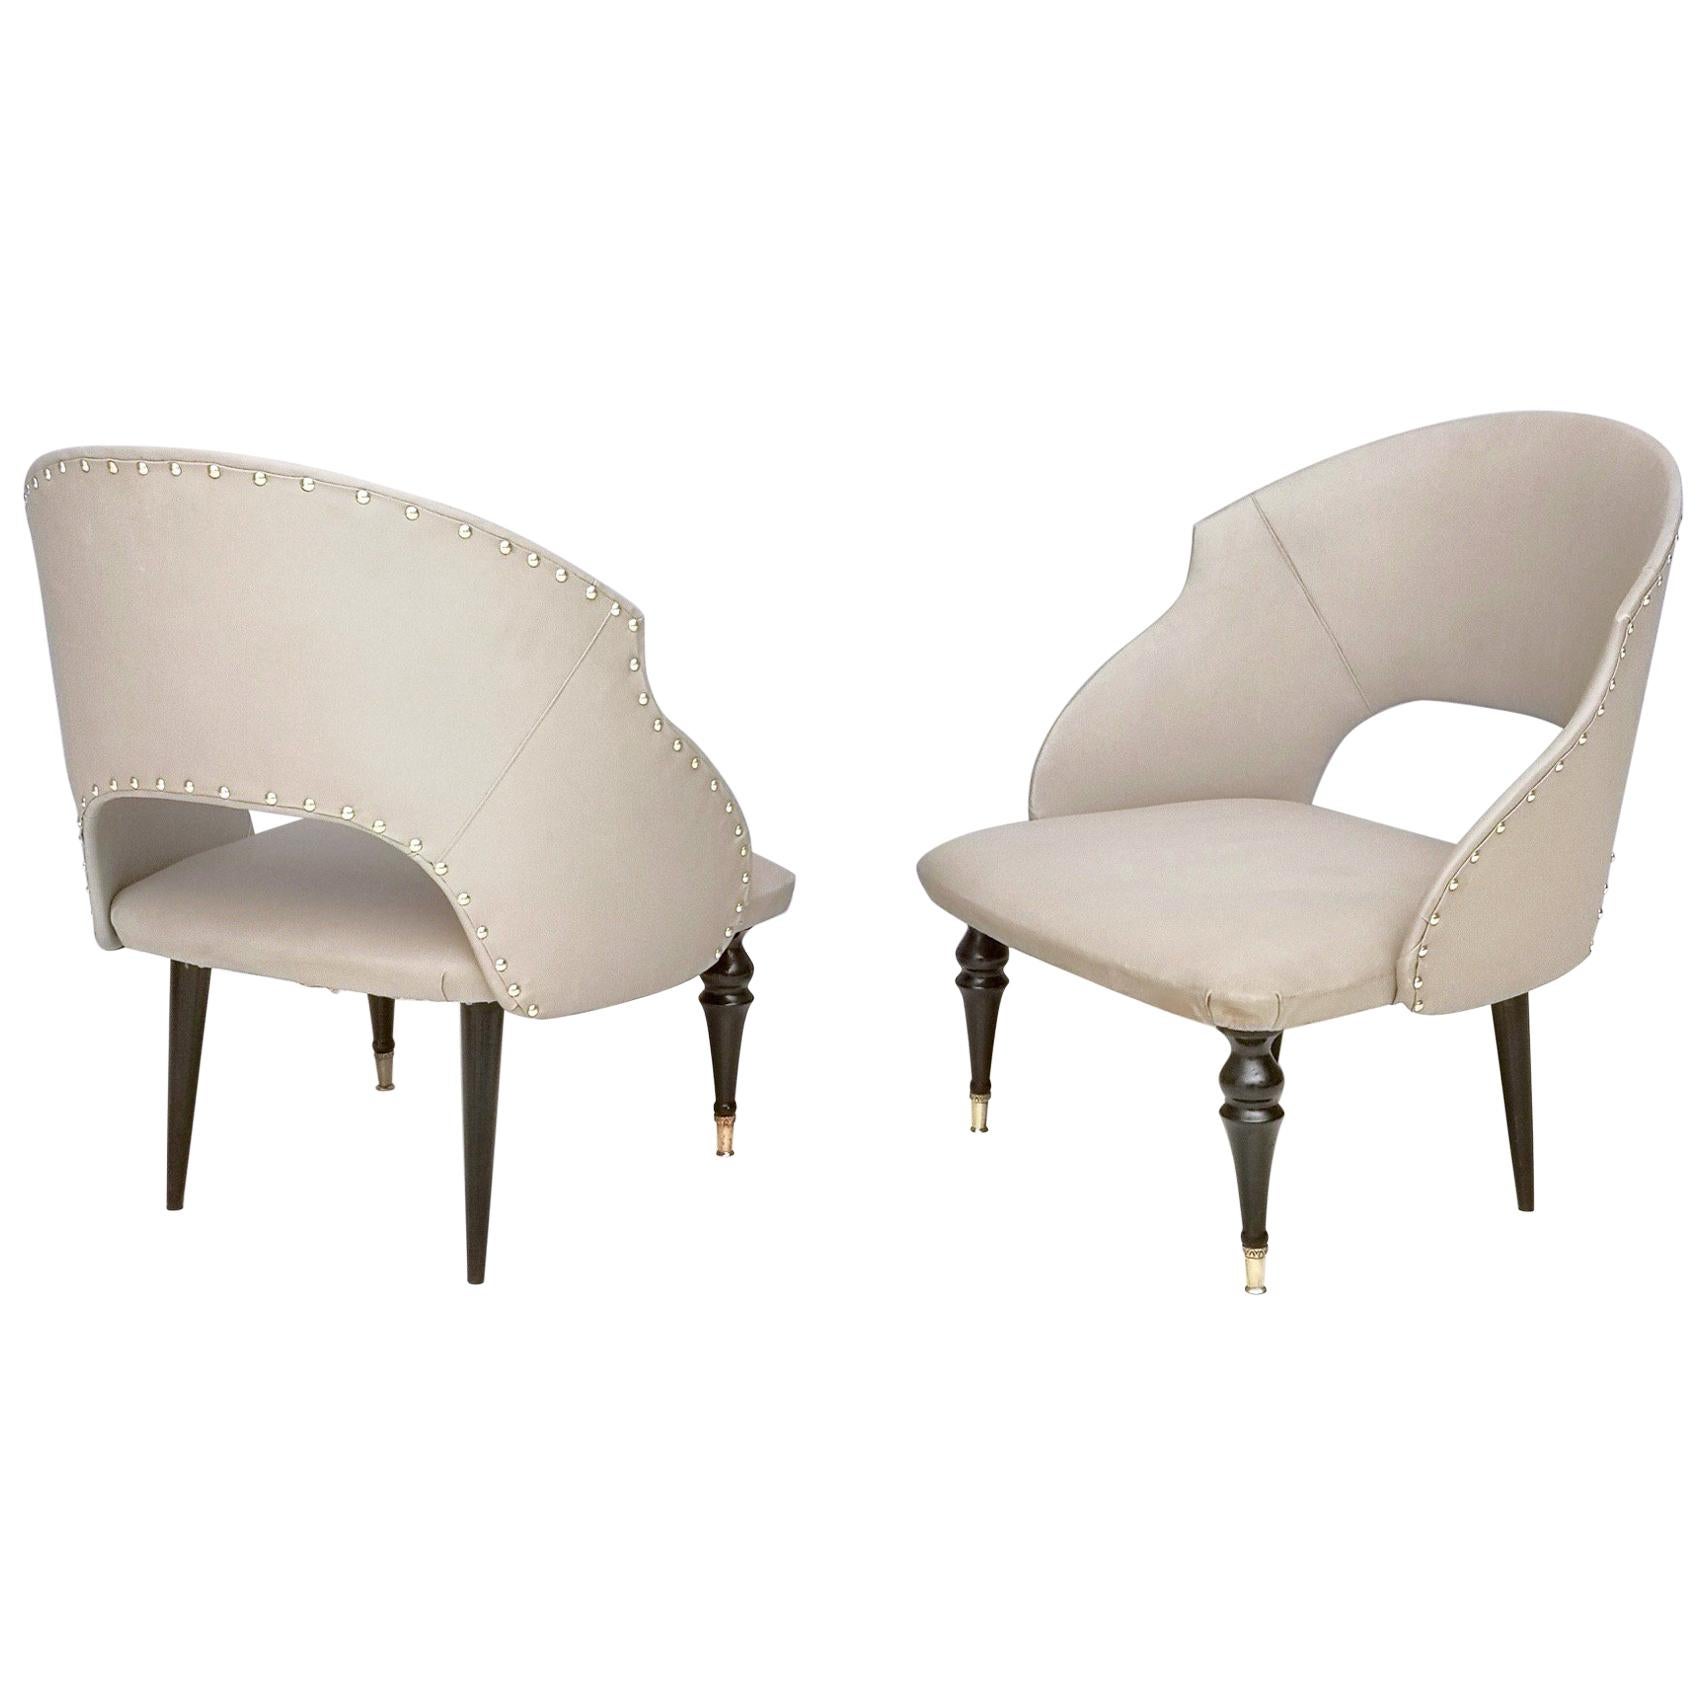 Pair of Mid-Century Ebonized Wood and Gray Skai Lounge Chairs, Italy